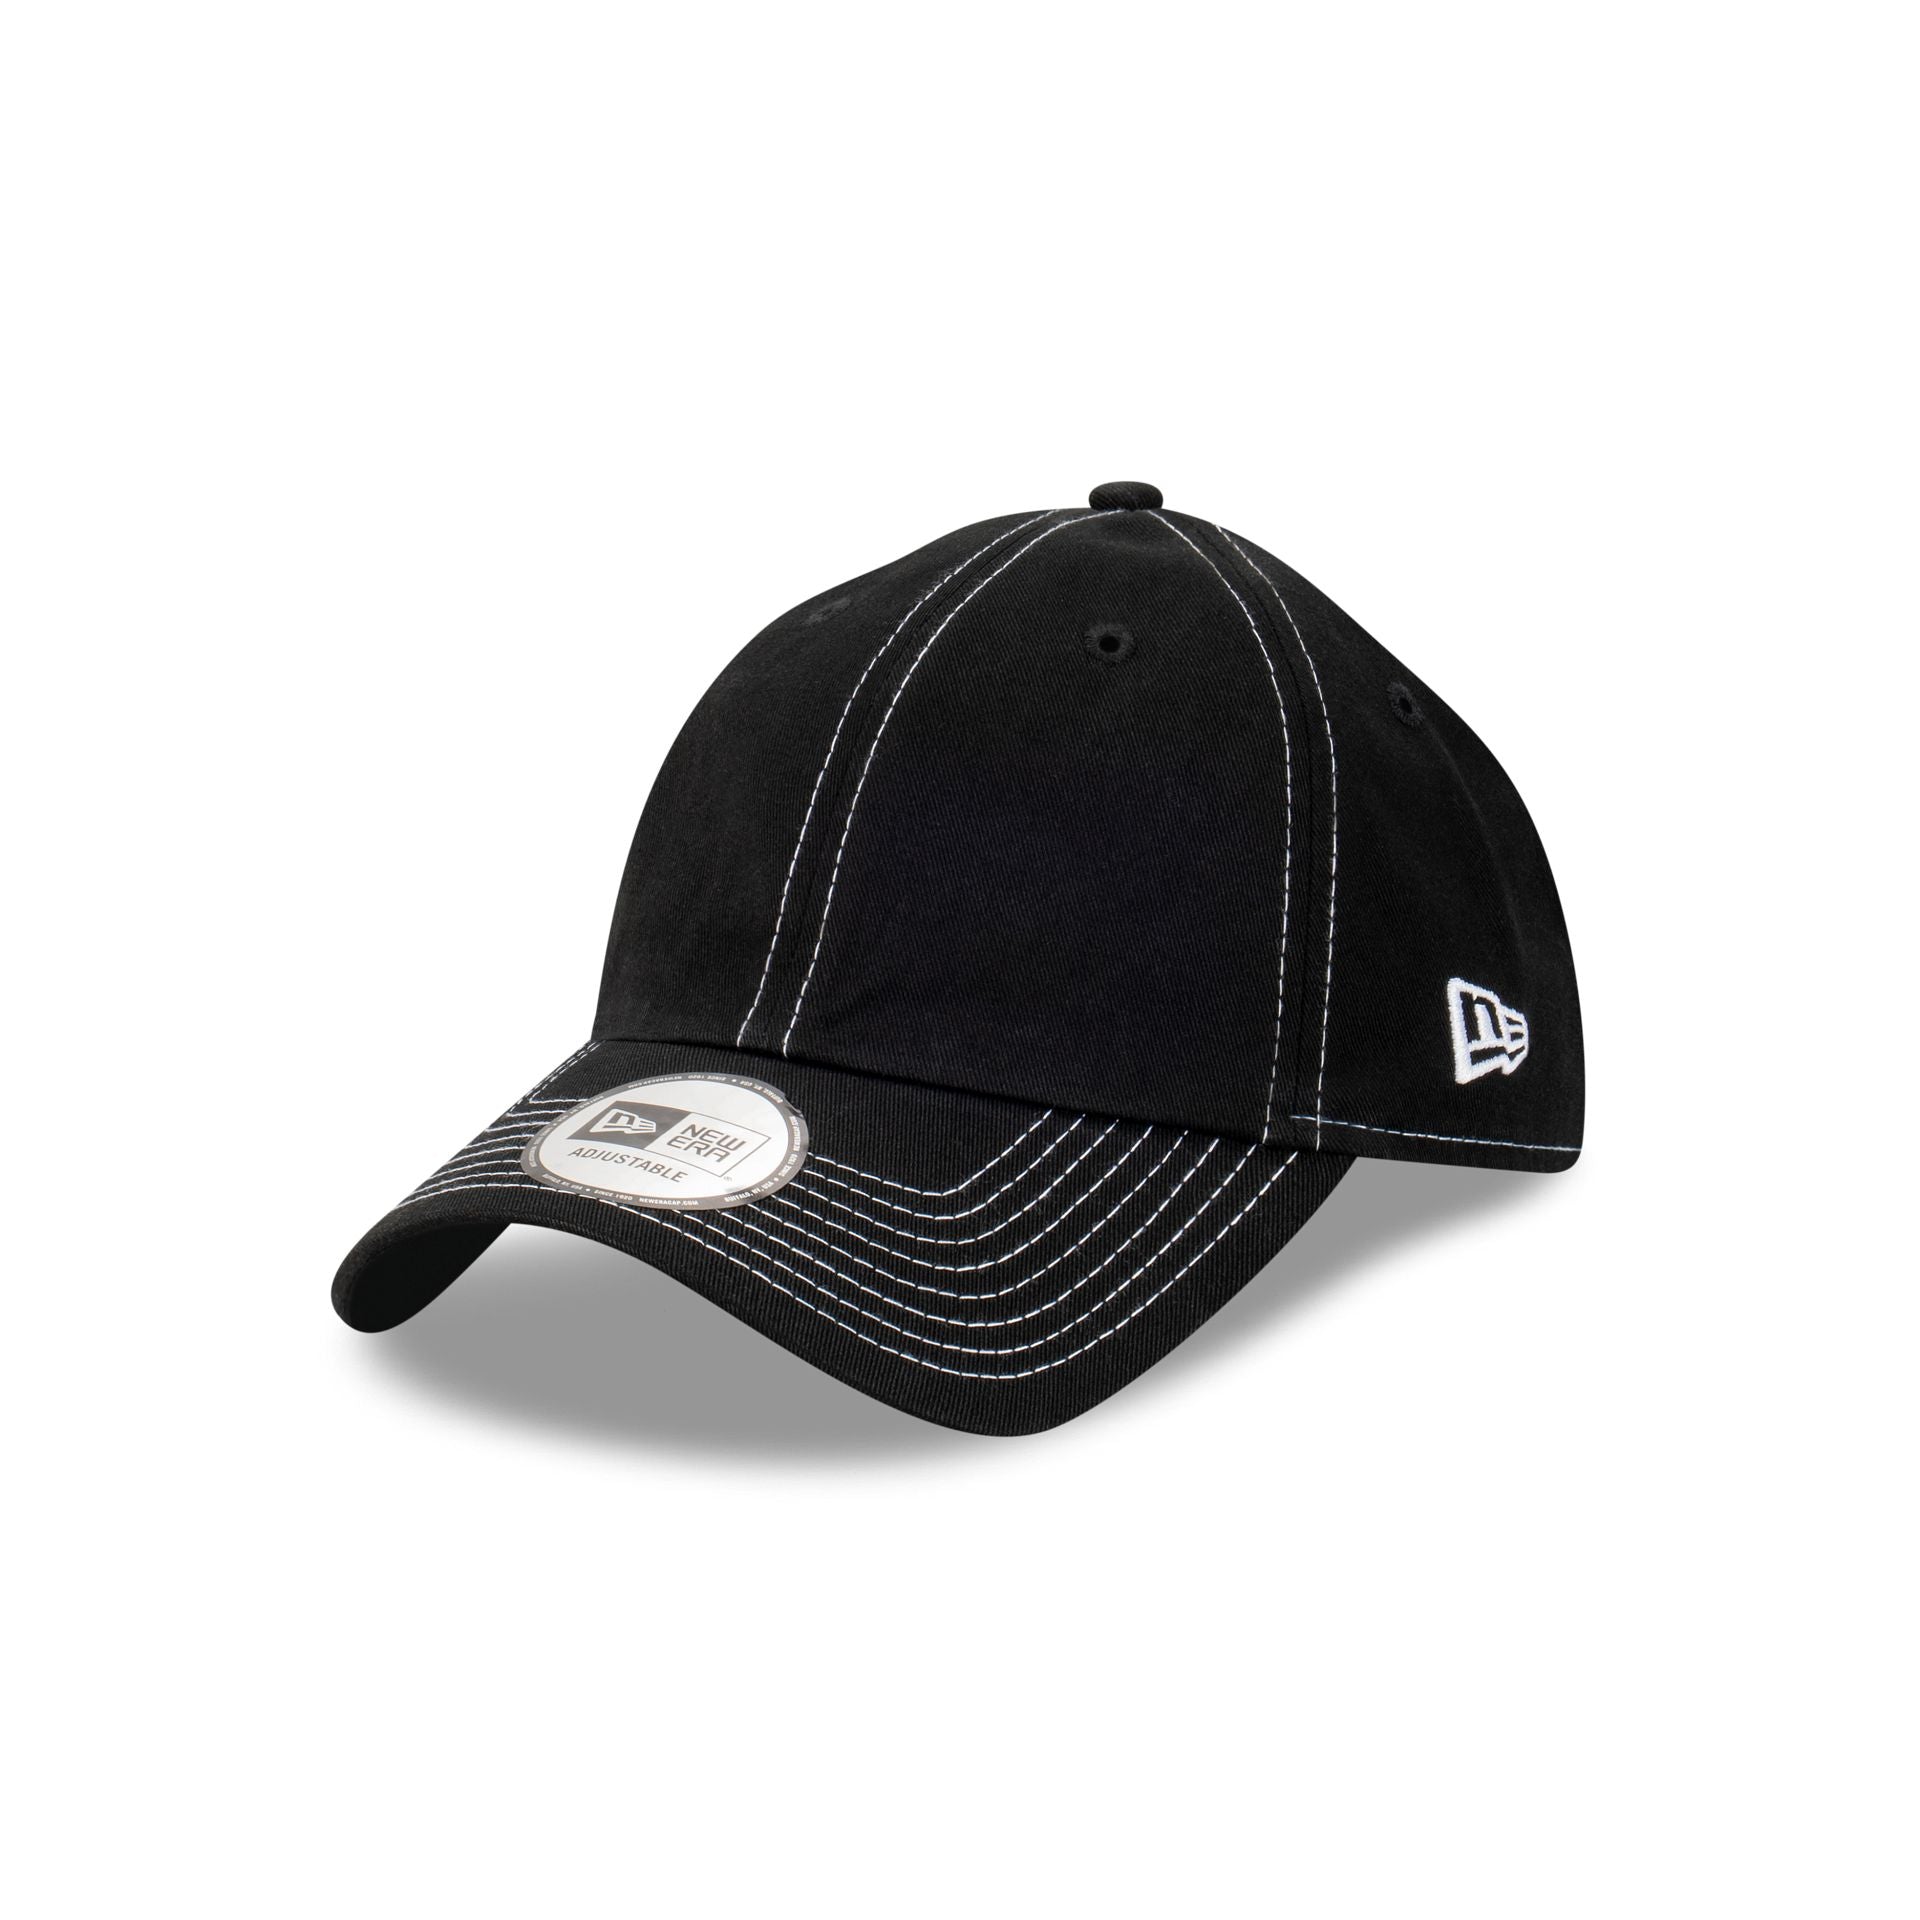 New Era Branded Contrast Black Casual Classic Hat – New Era Cap 